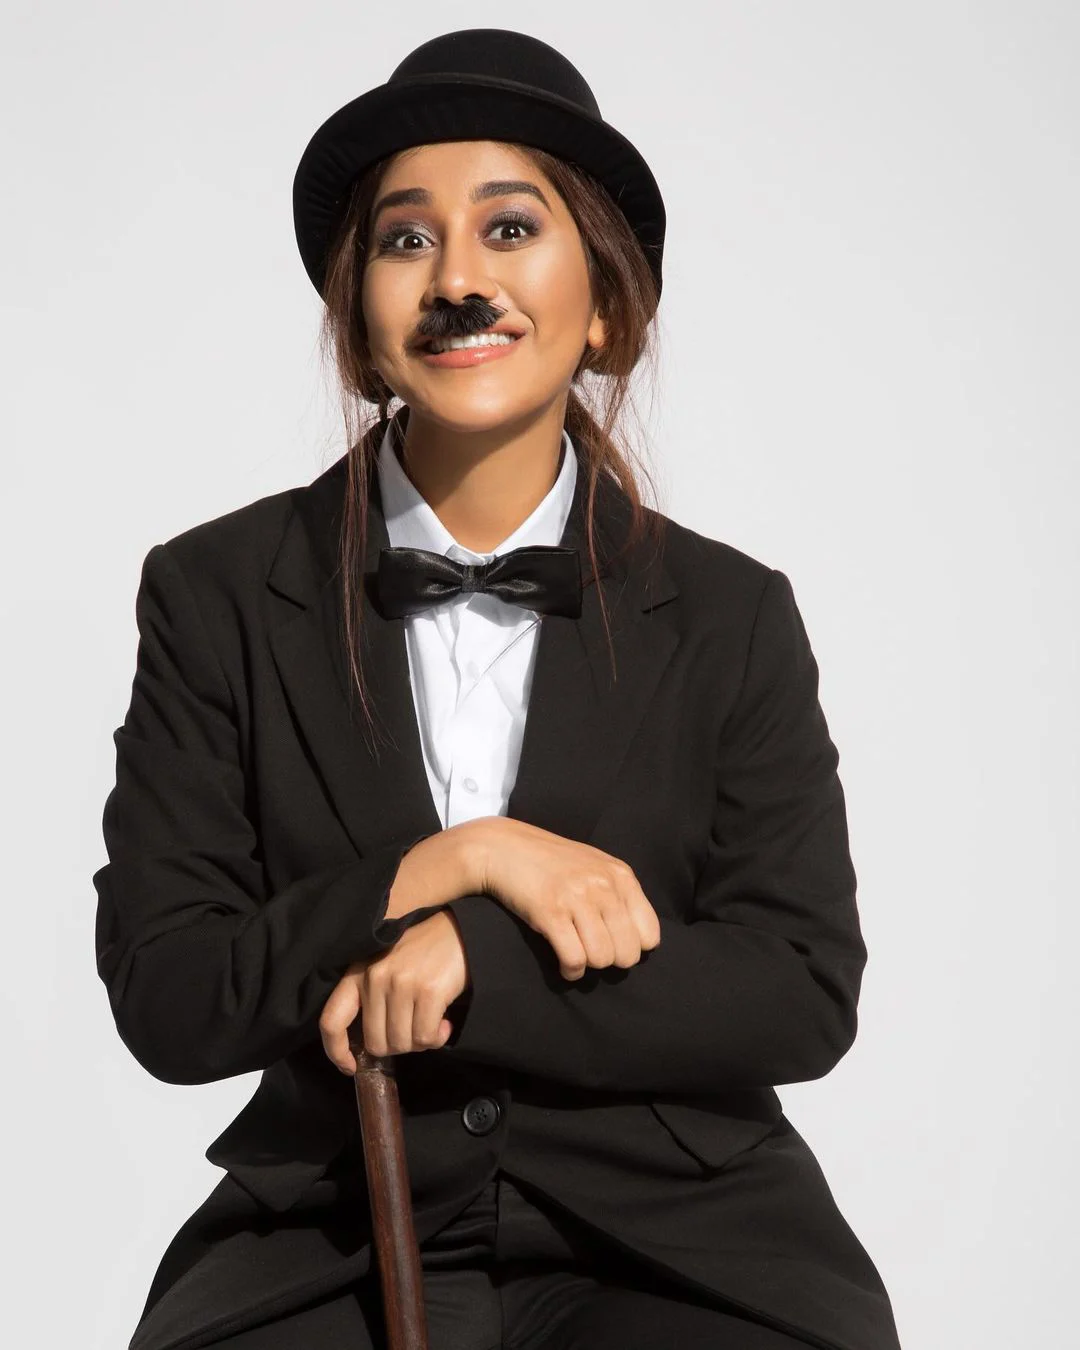 Nabha Natesh Cute Photos in Charlie Chaplin Getup